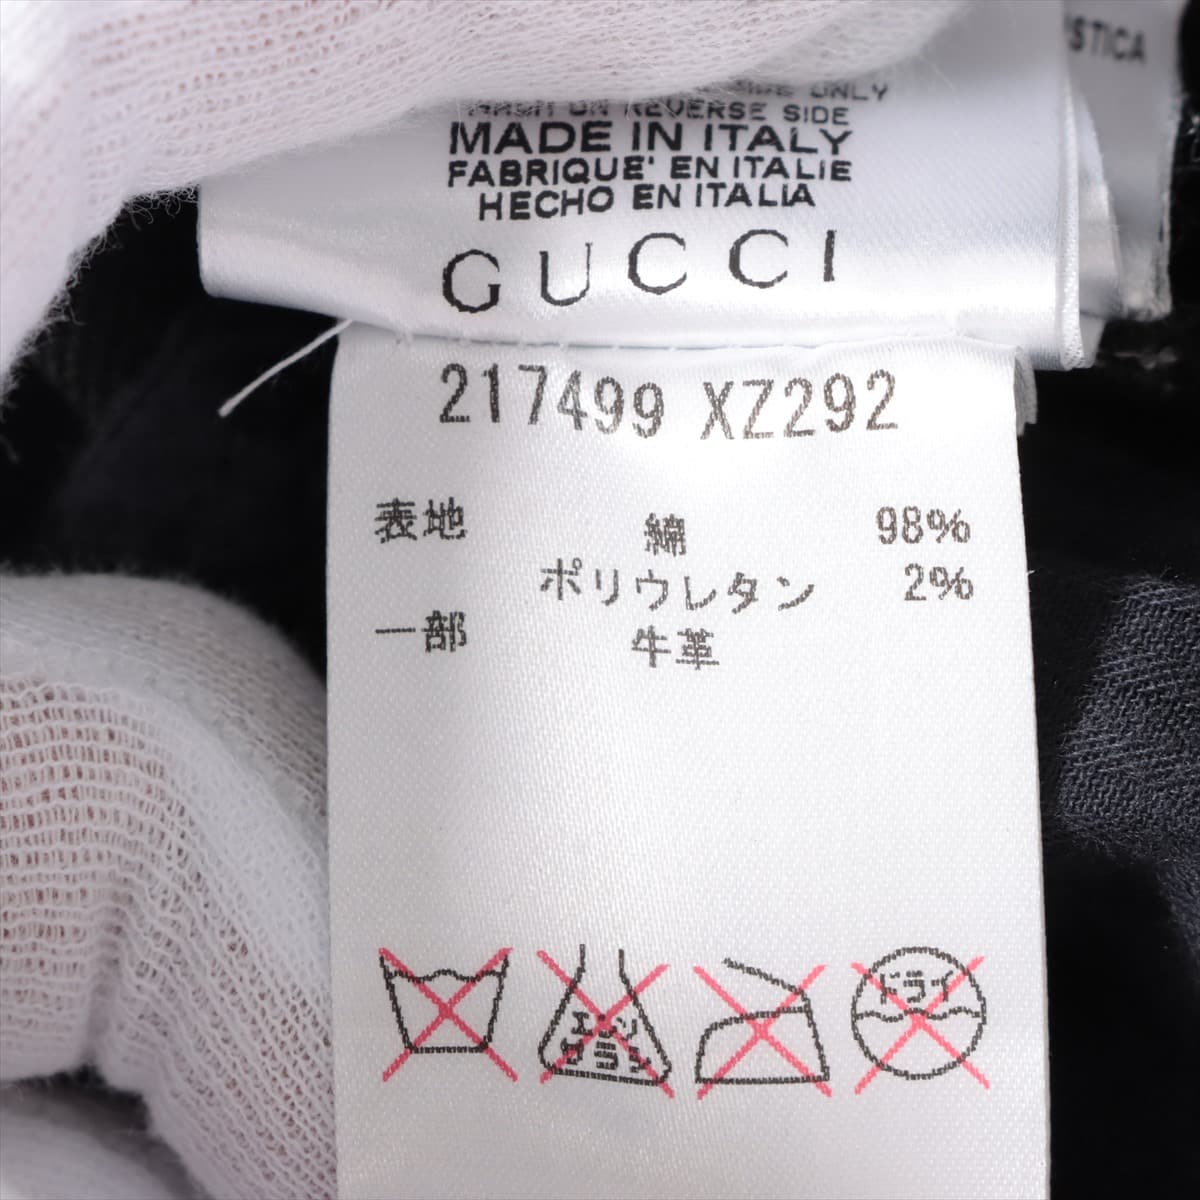 Gucci 09 Cotton & polyurethane Denim pants 44 Men's Blue x black  217499 Glitter coatings